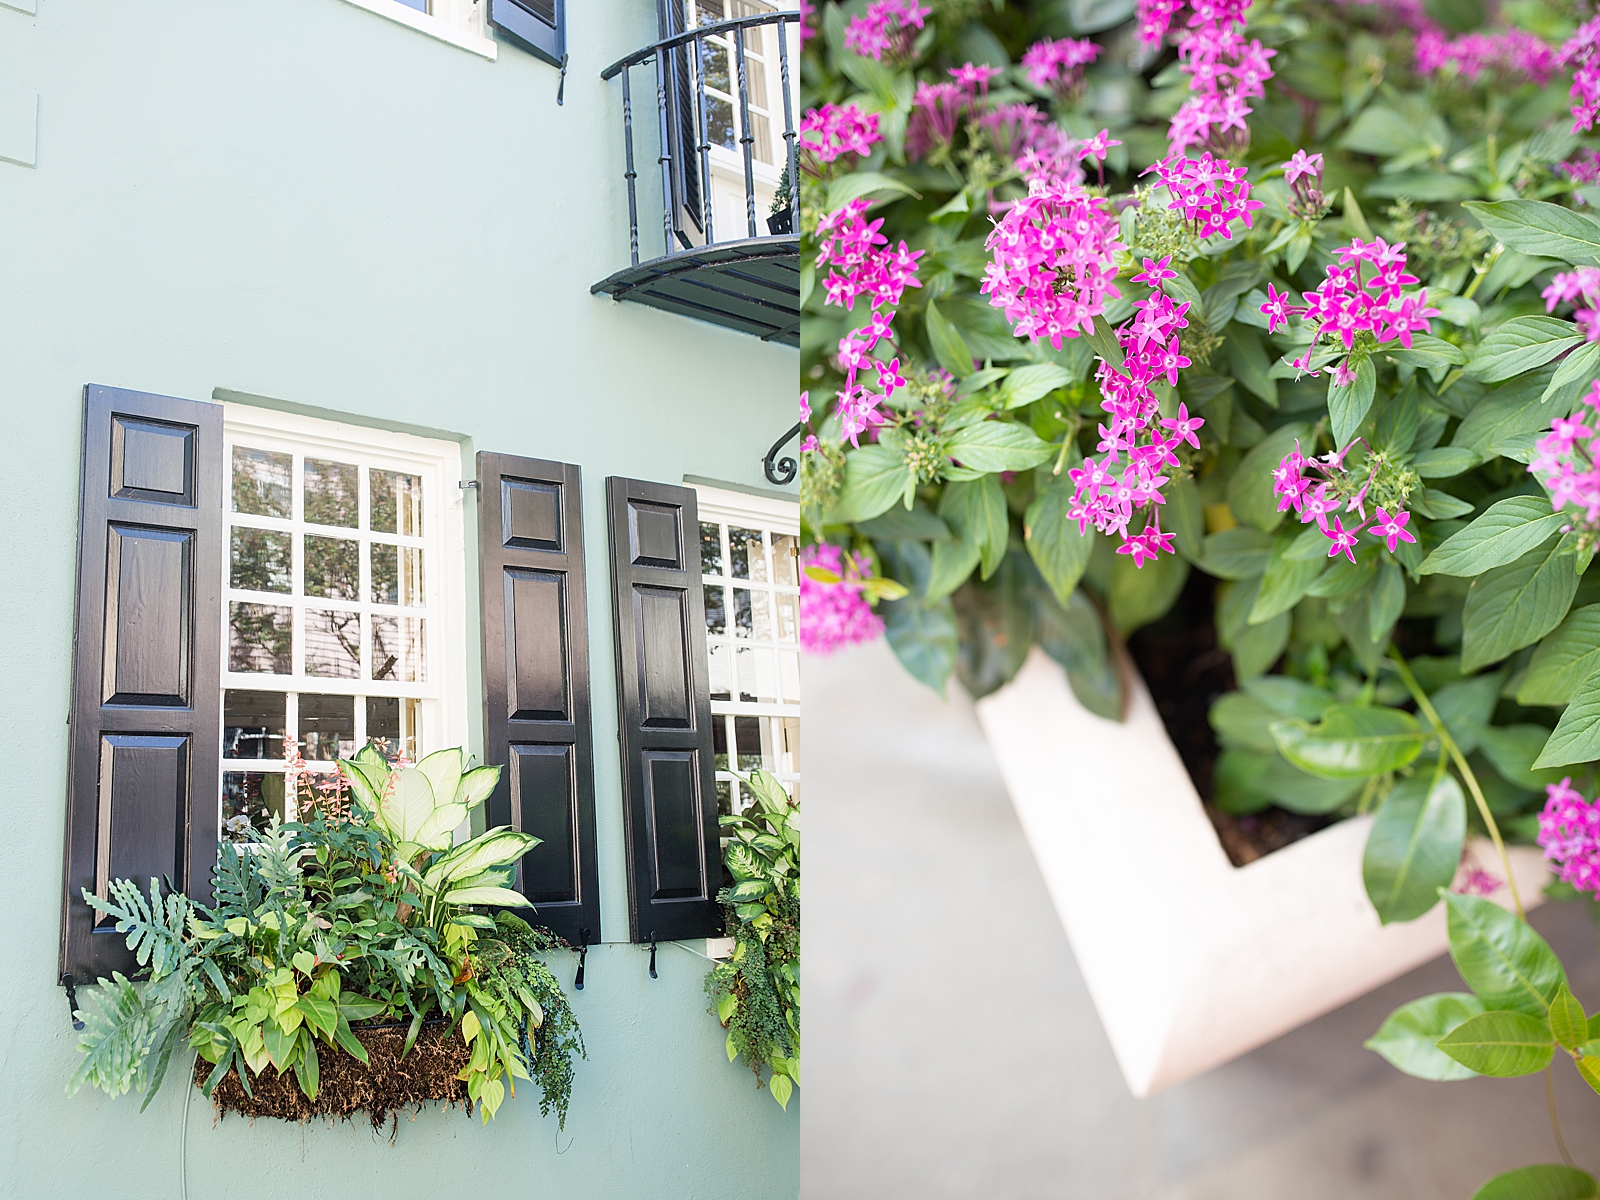 Downtown Charleston Window and flowers photos 